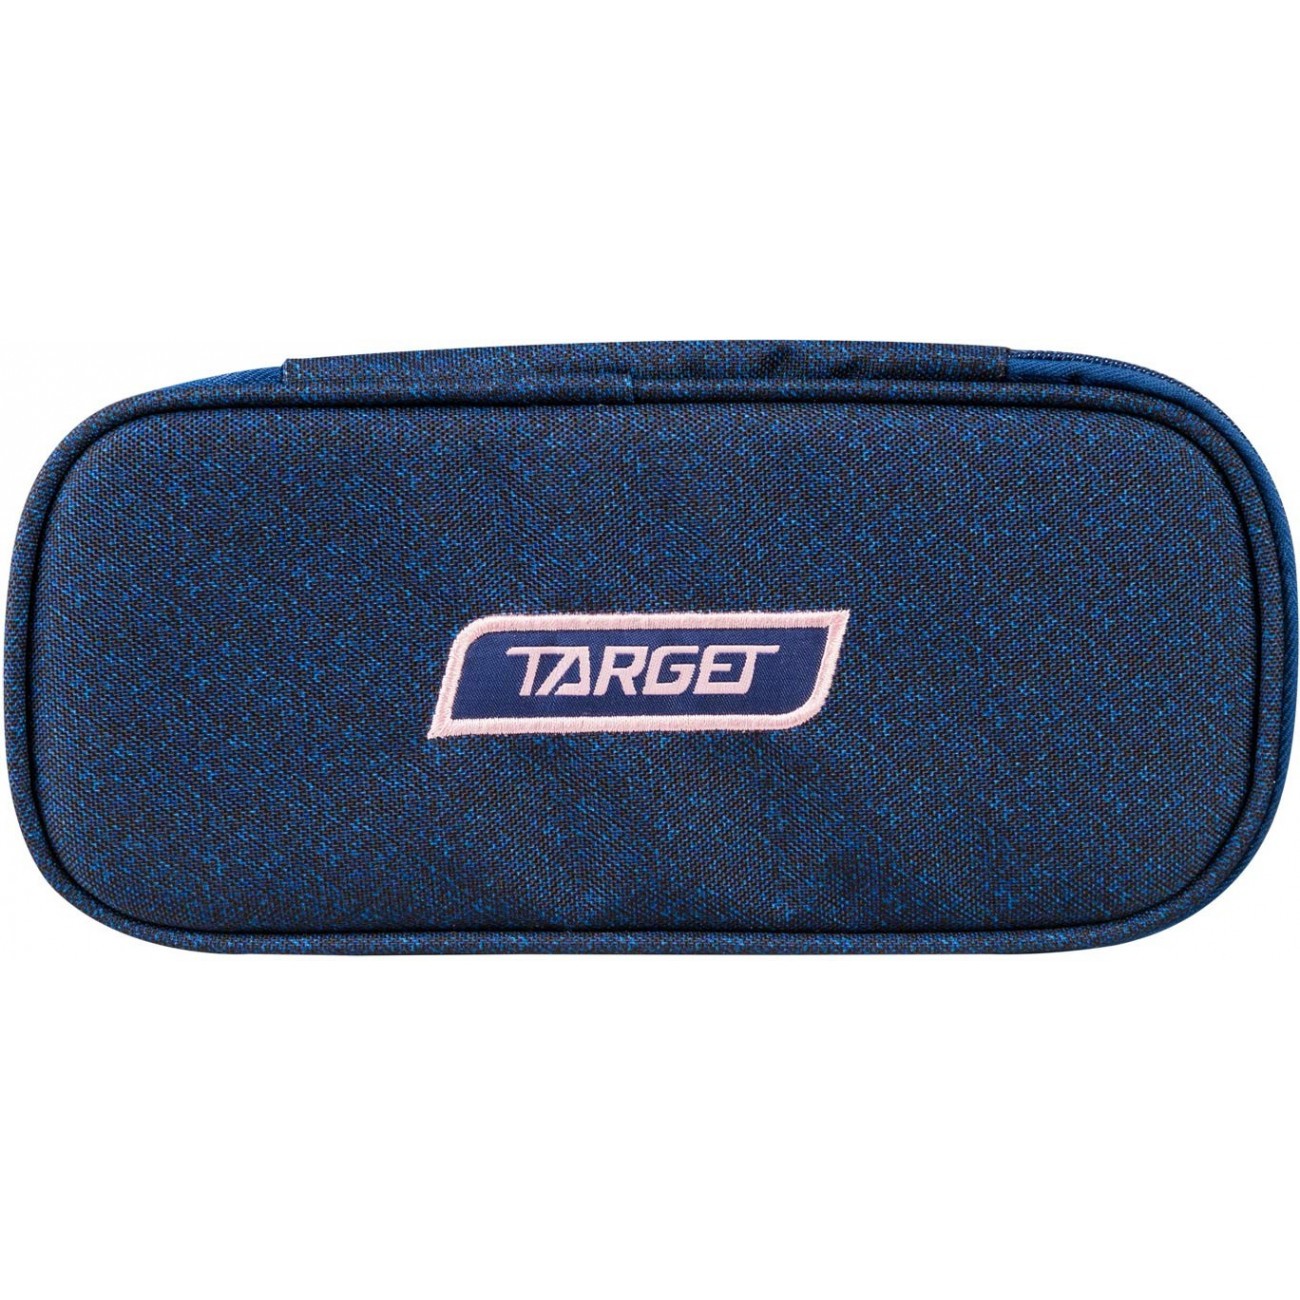 Target collection пенал Blue